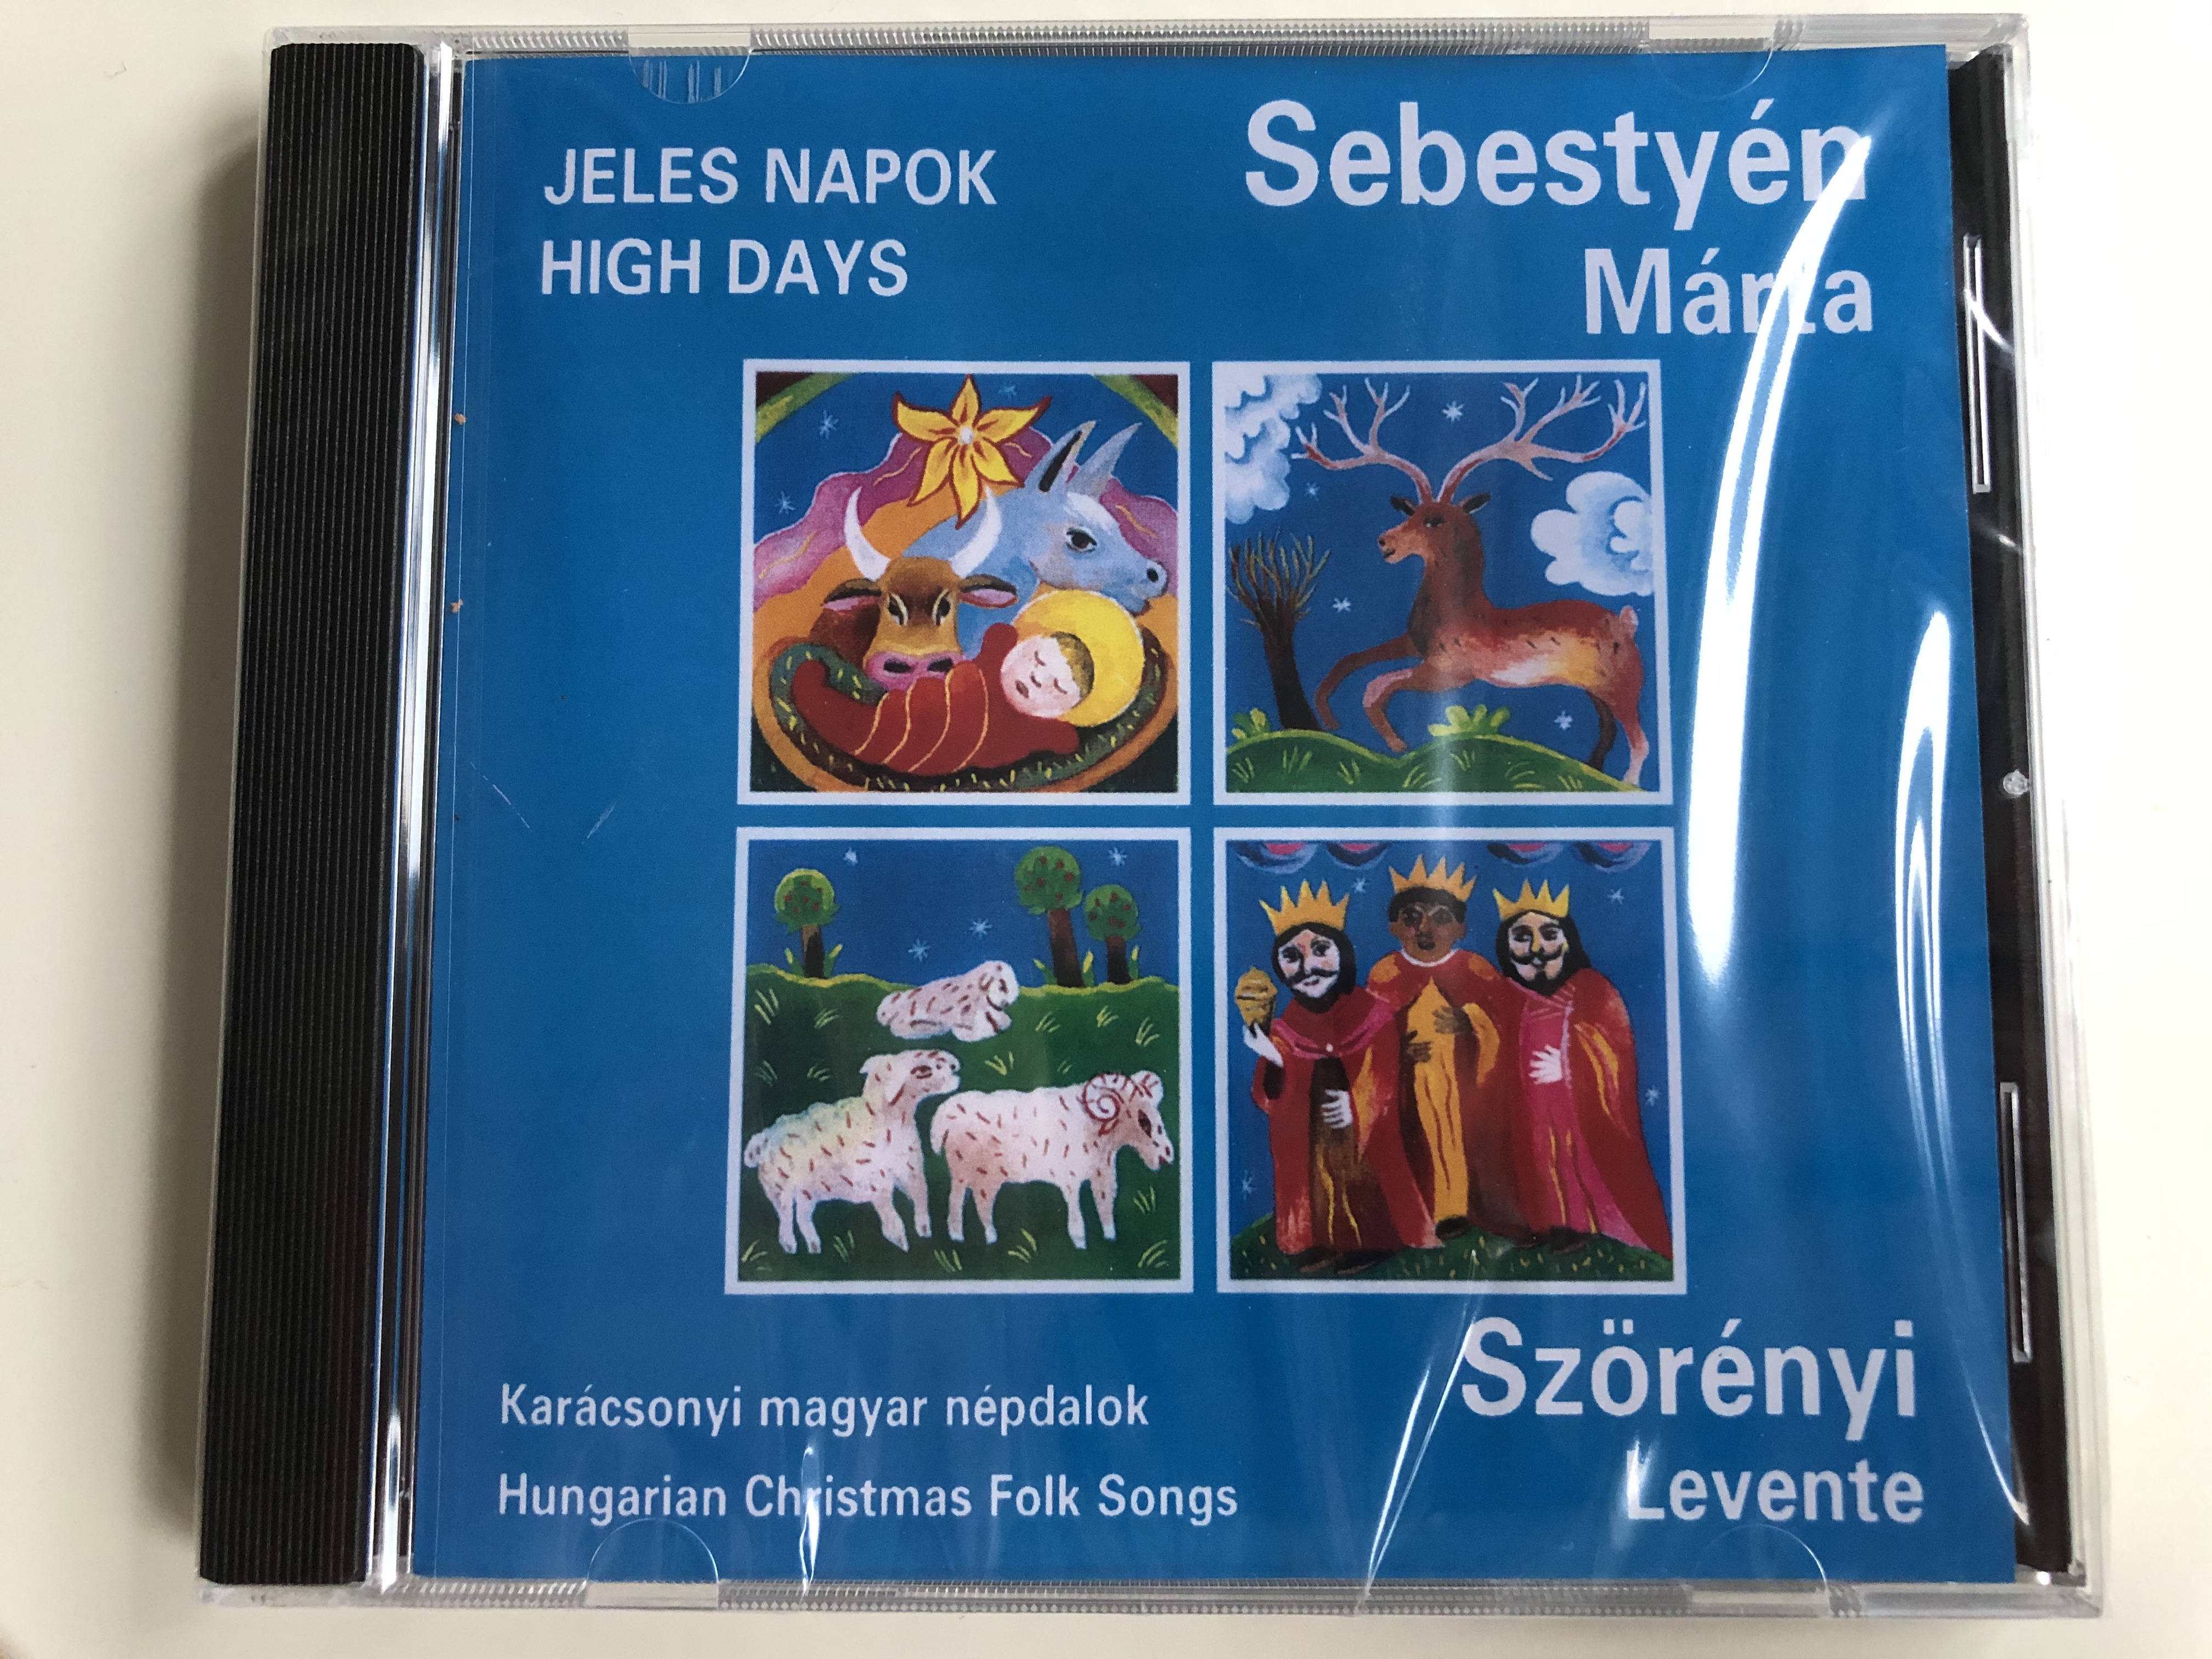 sebesty-n-m-rta-sz-r-nyi-levente-jeles-napok-high-days-kar-csonyi-magyar-n-pdalok-hungarian-christmas-folk-songs-hungaroton-gong-kft.-audio-cd-hcd-17888-1-.jpg